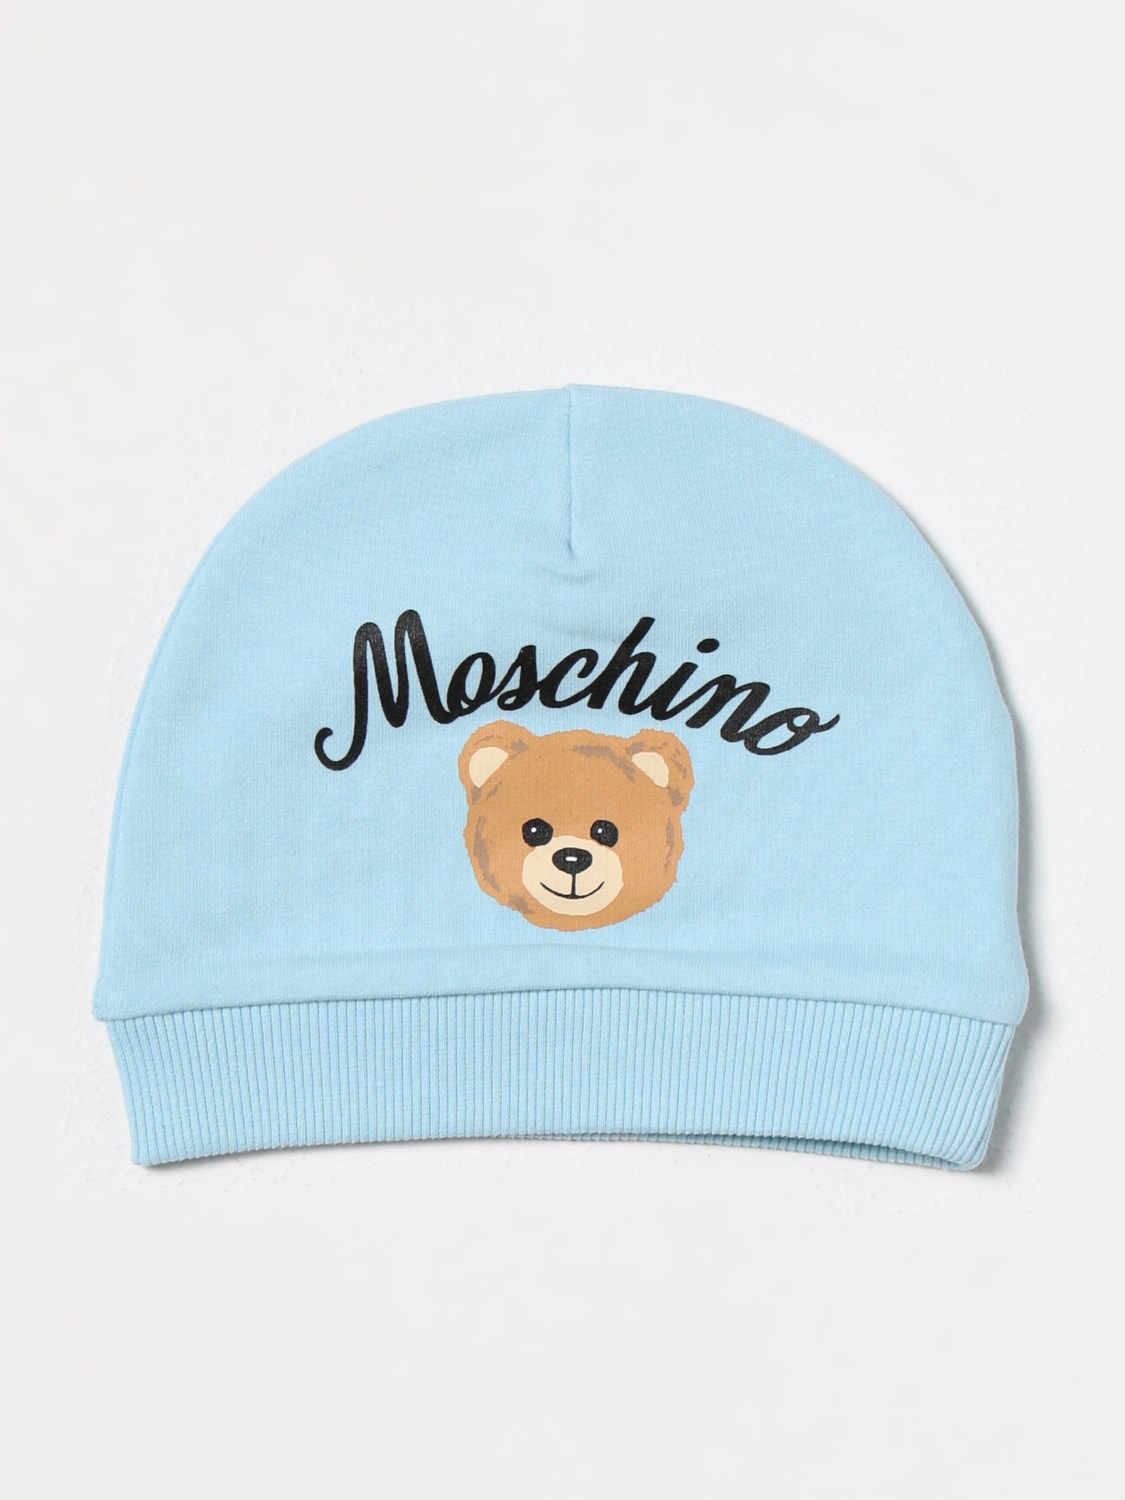 MOSCHINO BABY: Cappello in cotone con logo stampato - Celeste  Cappello  Neonato Moschino Baby MPX035LDA55 online su